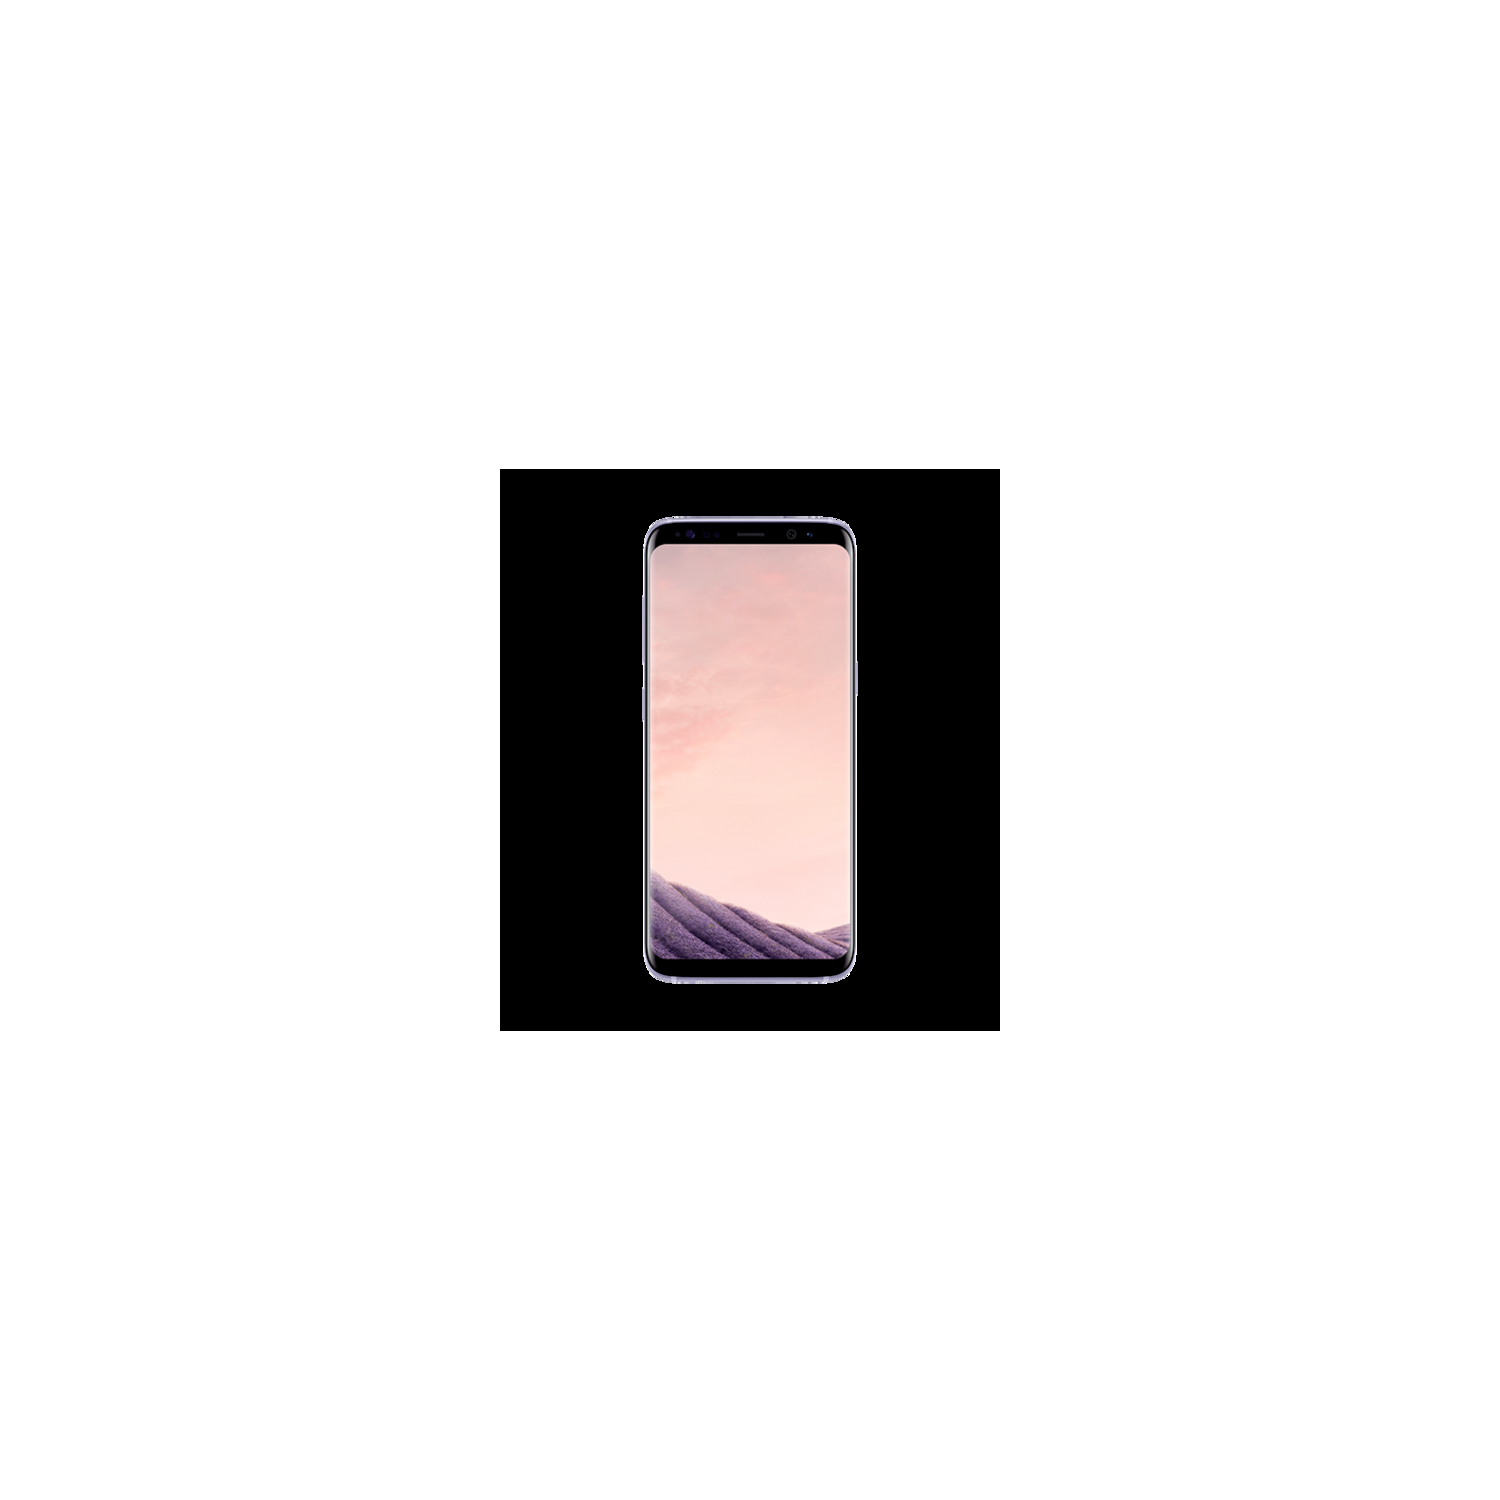 Samsung Galaxy S8 64GB Smartphone - Orchid Gray - Unlocked - Open Box